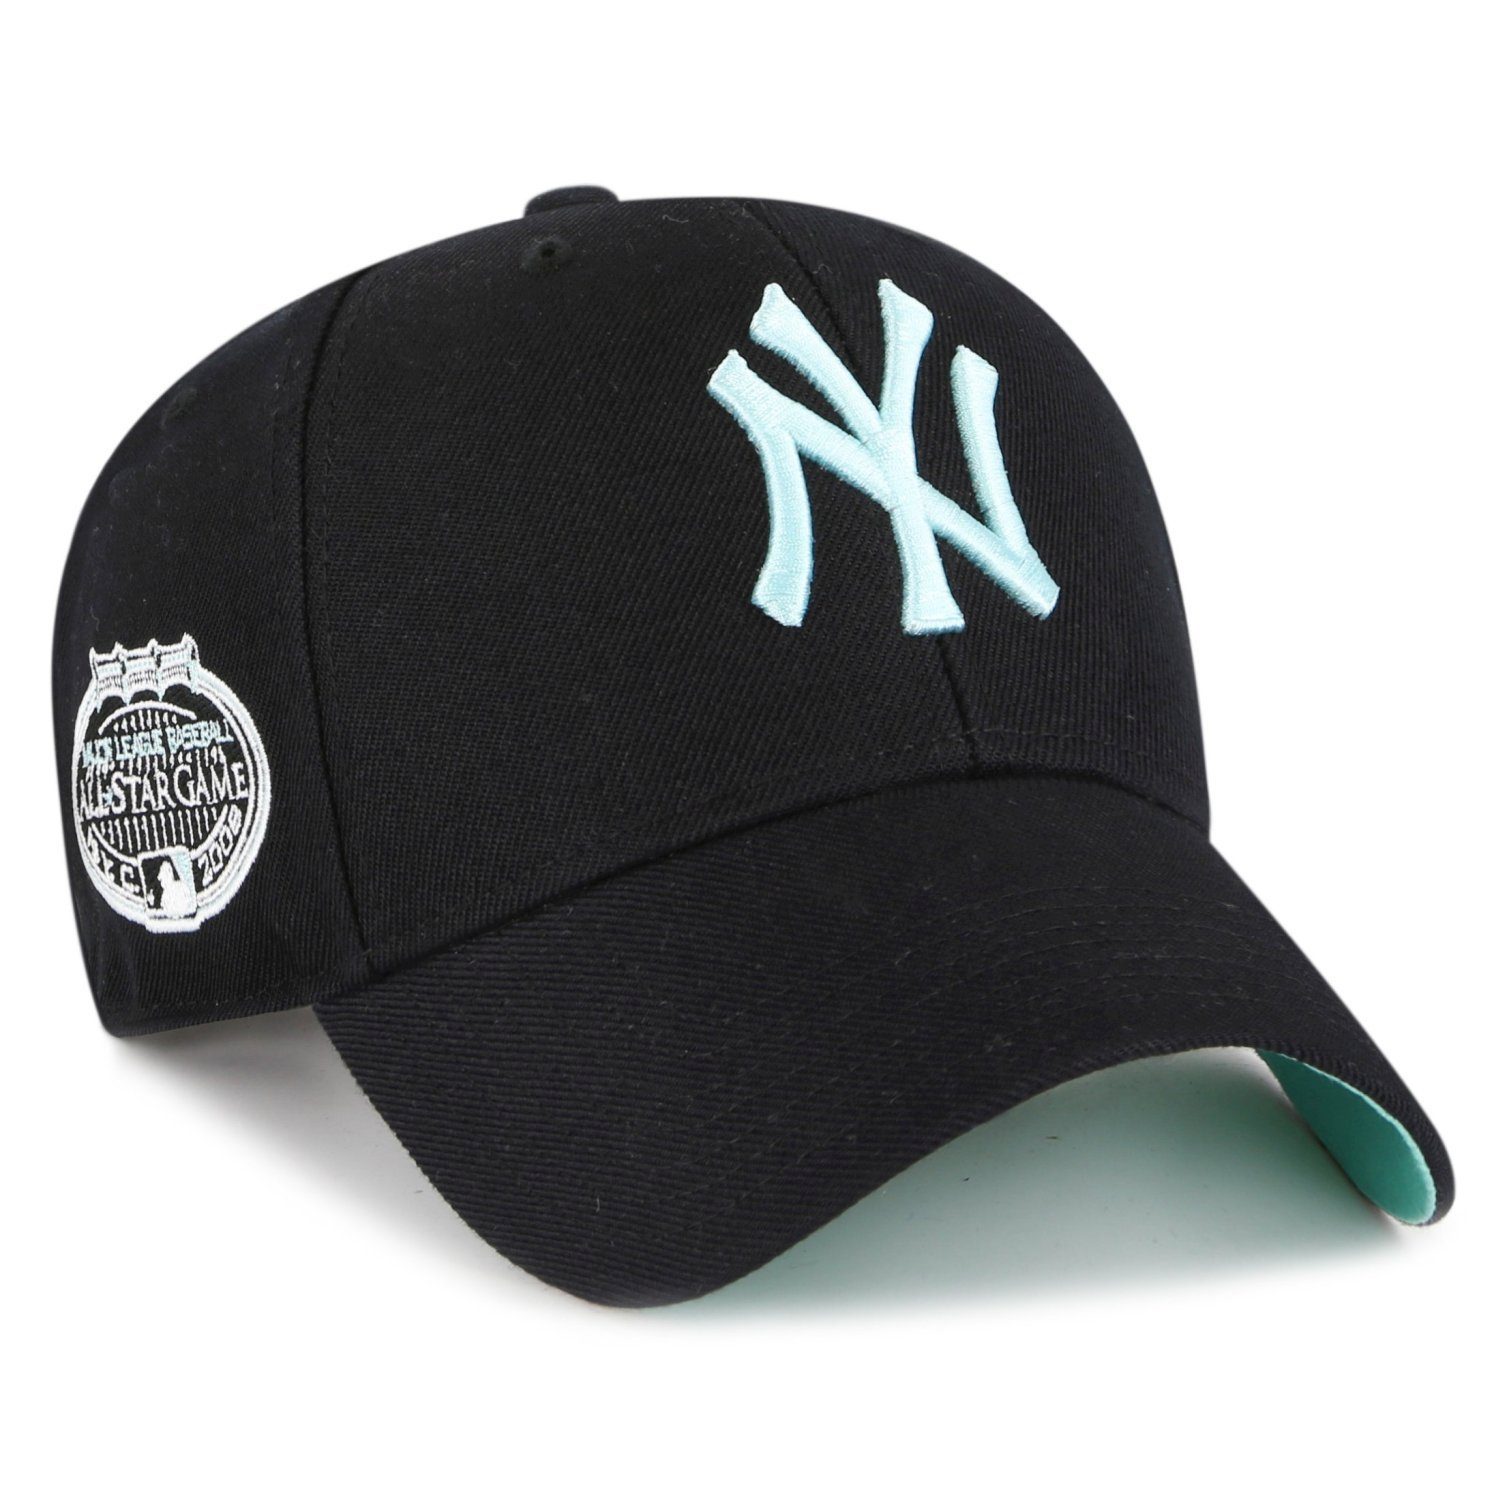 '47 Brand Snapback Cap ALL STAR GAME New York Yankees